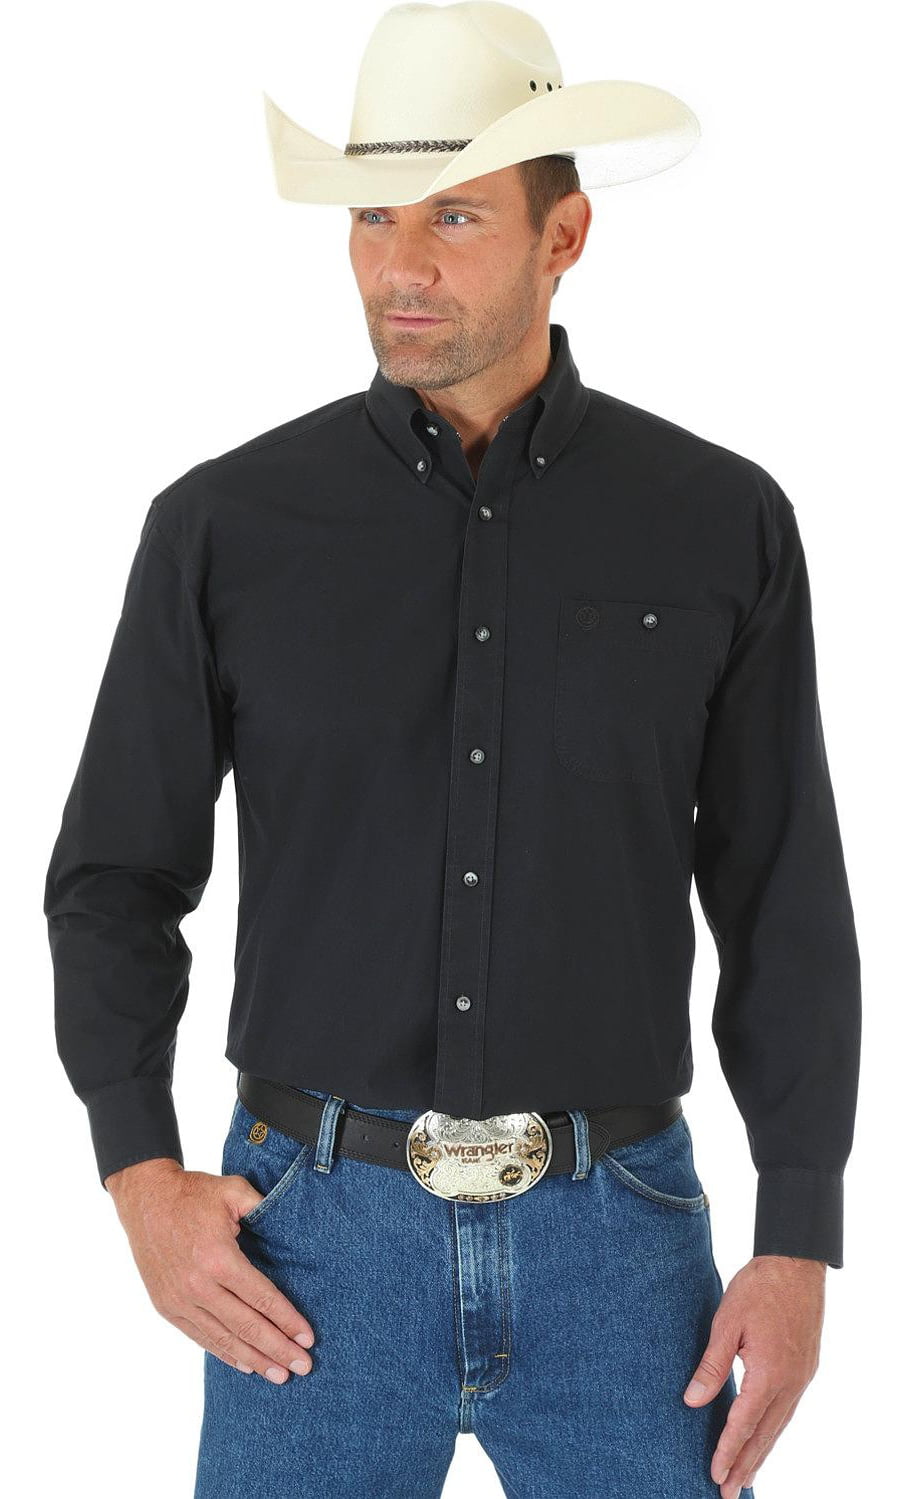 Wrangler - Men's George Strait Long Sleeve Shirt - Mgs269x - Walmart